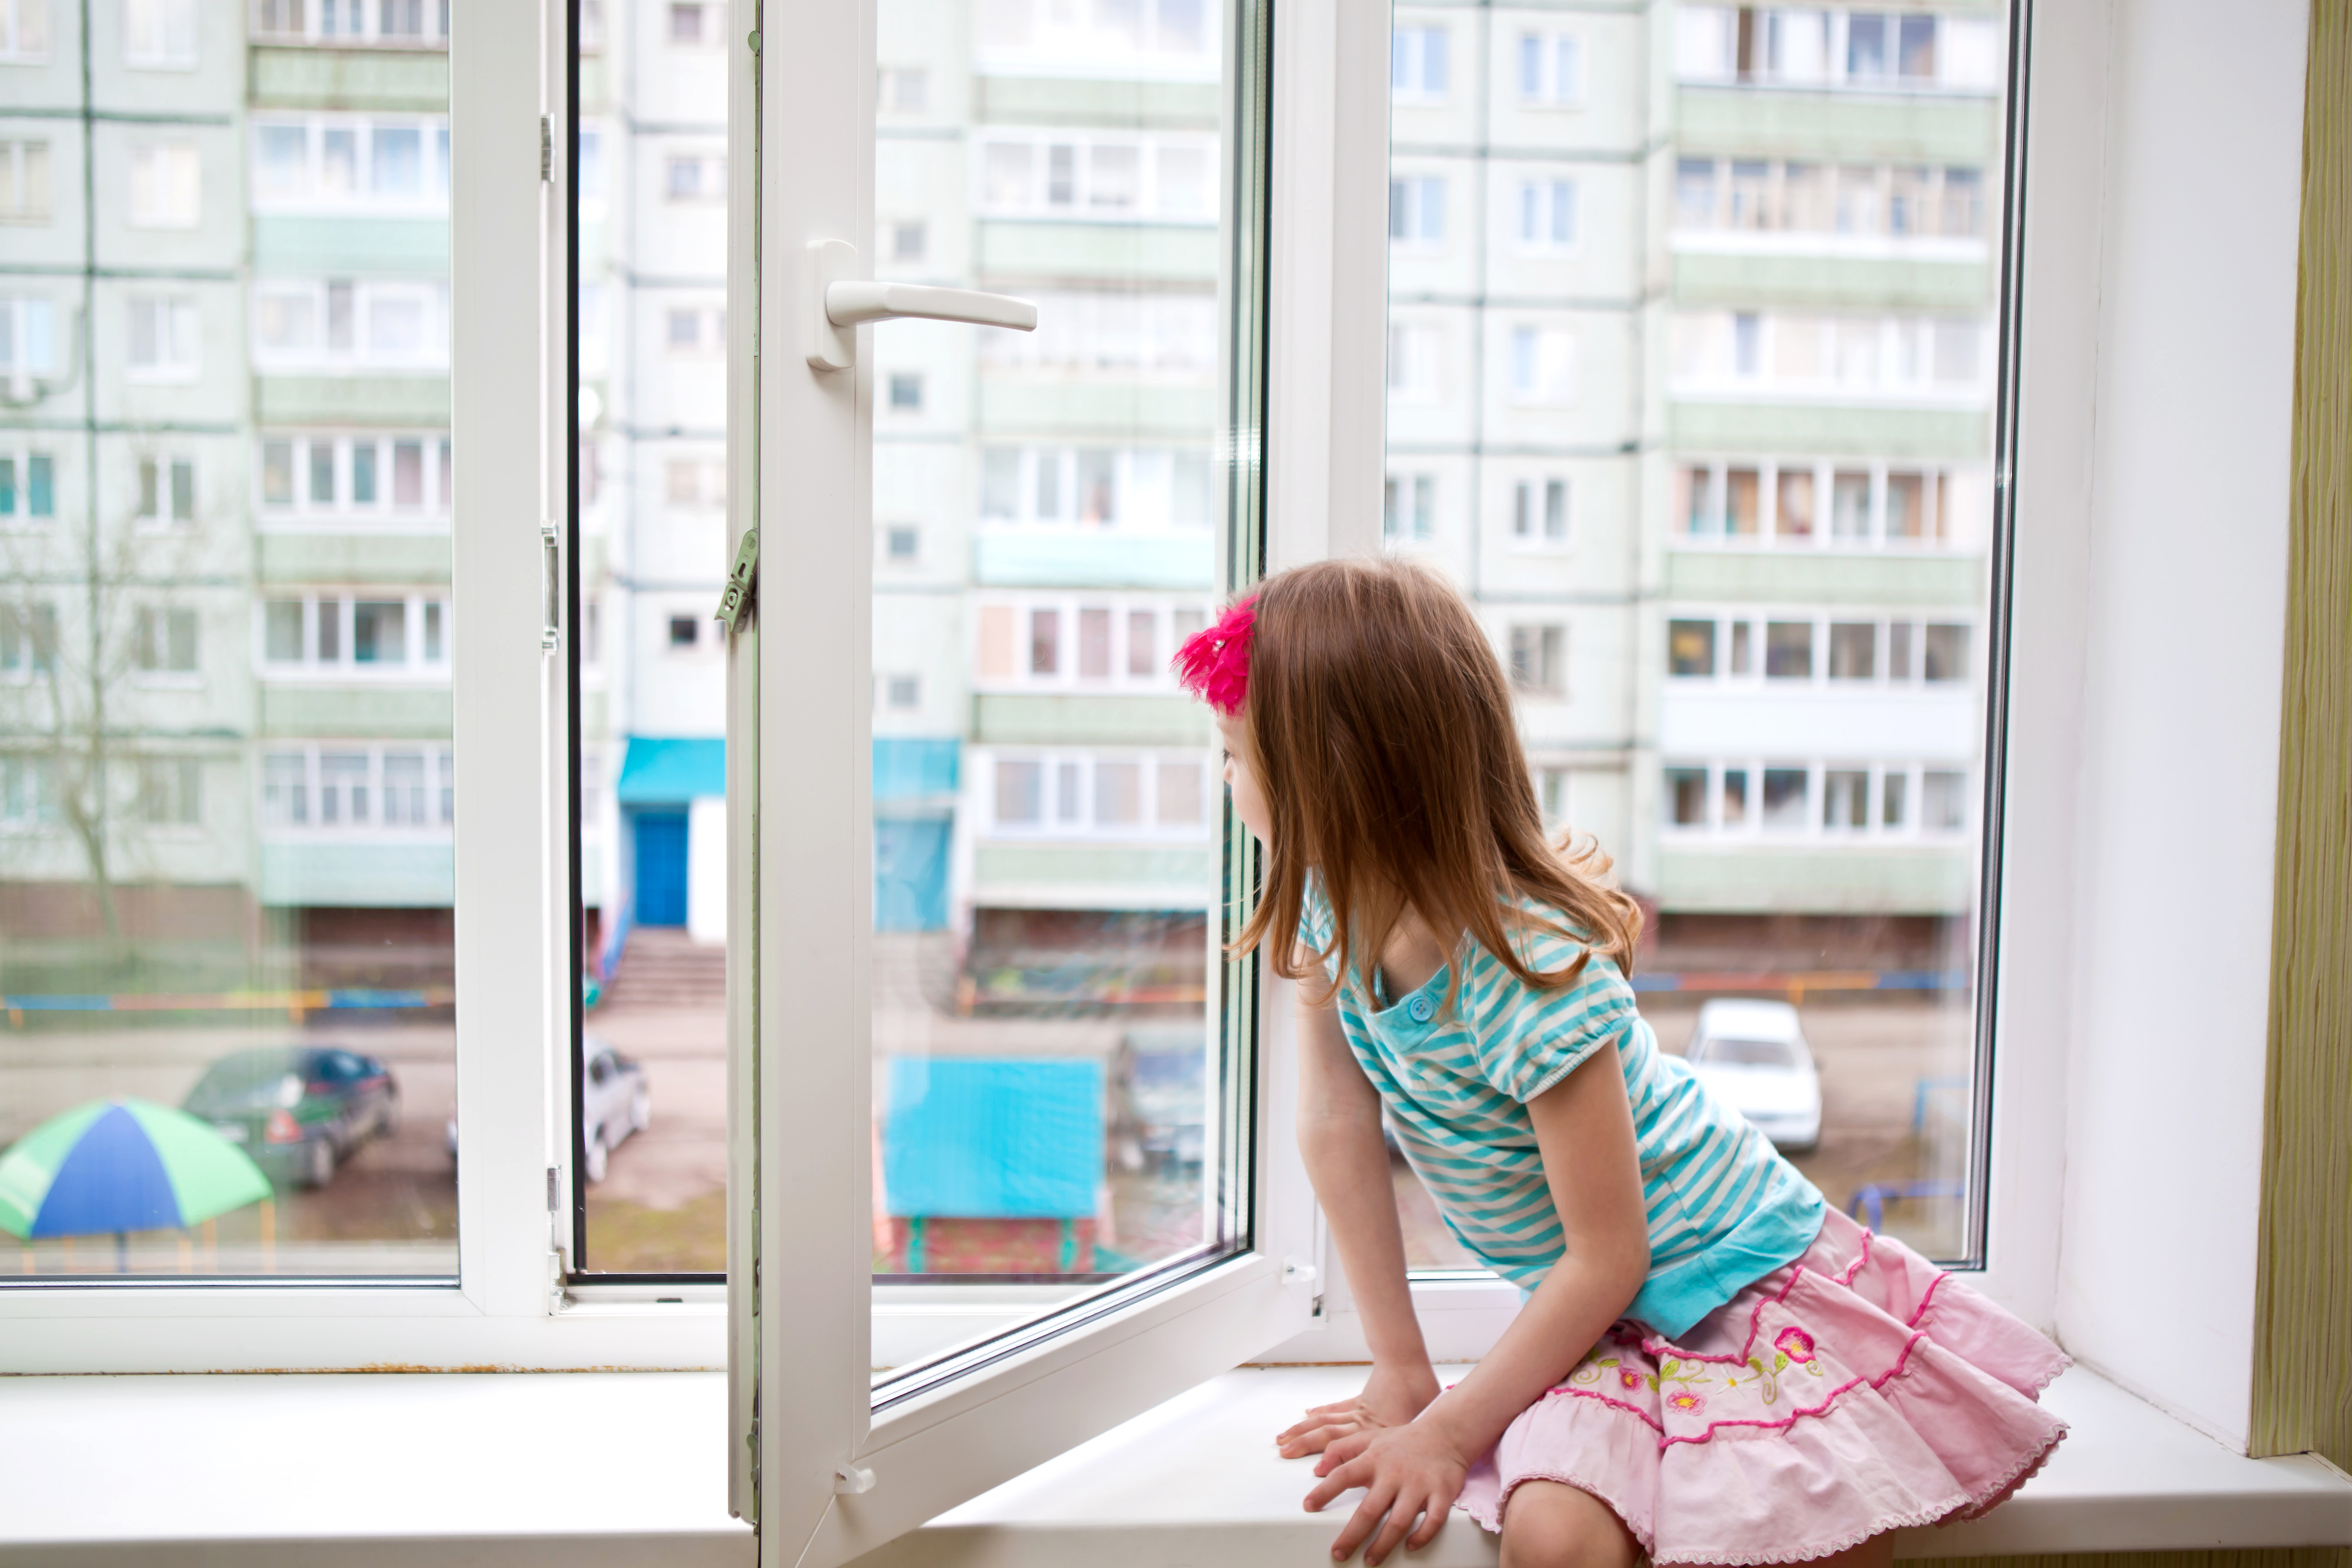 Ребенок на подоконнике. Девочка у окна. Девочка на подоконнике. Ребенок около окна. Почему игра в окне